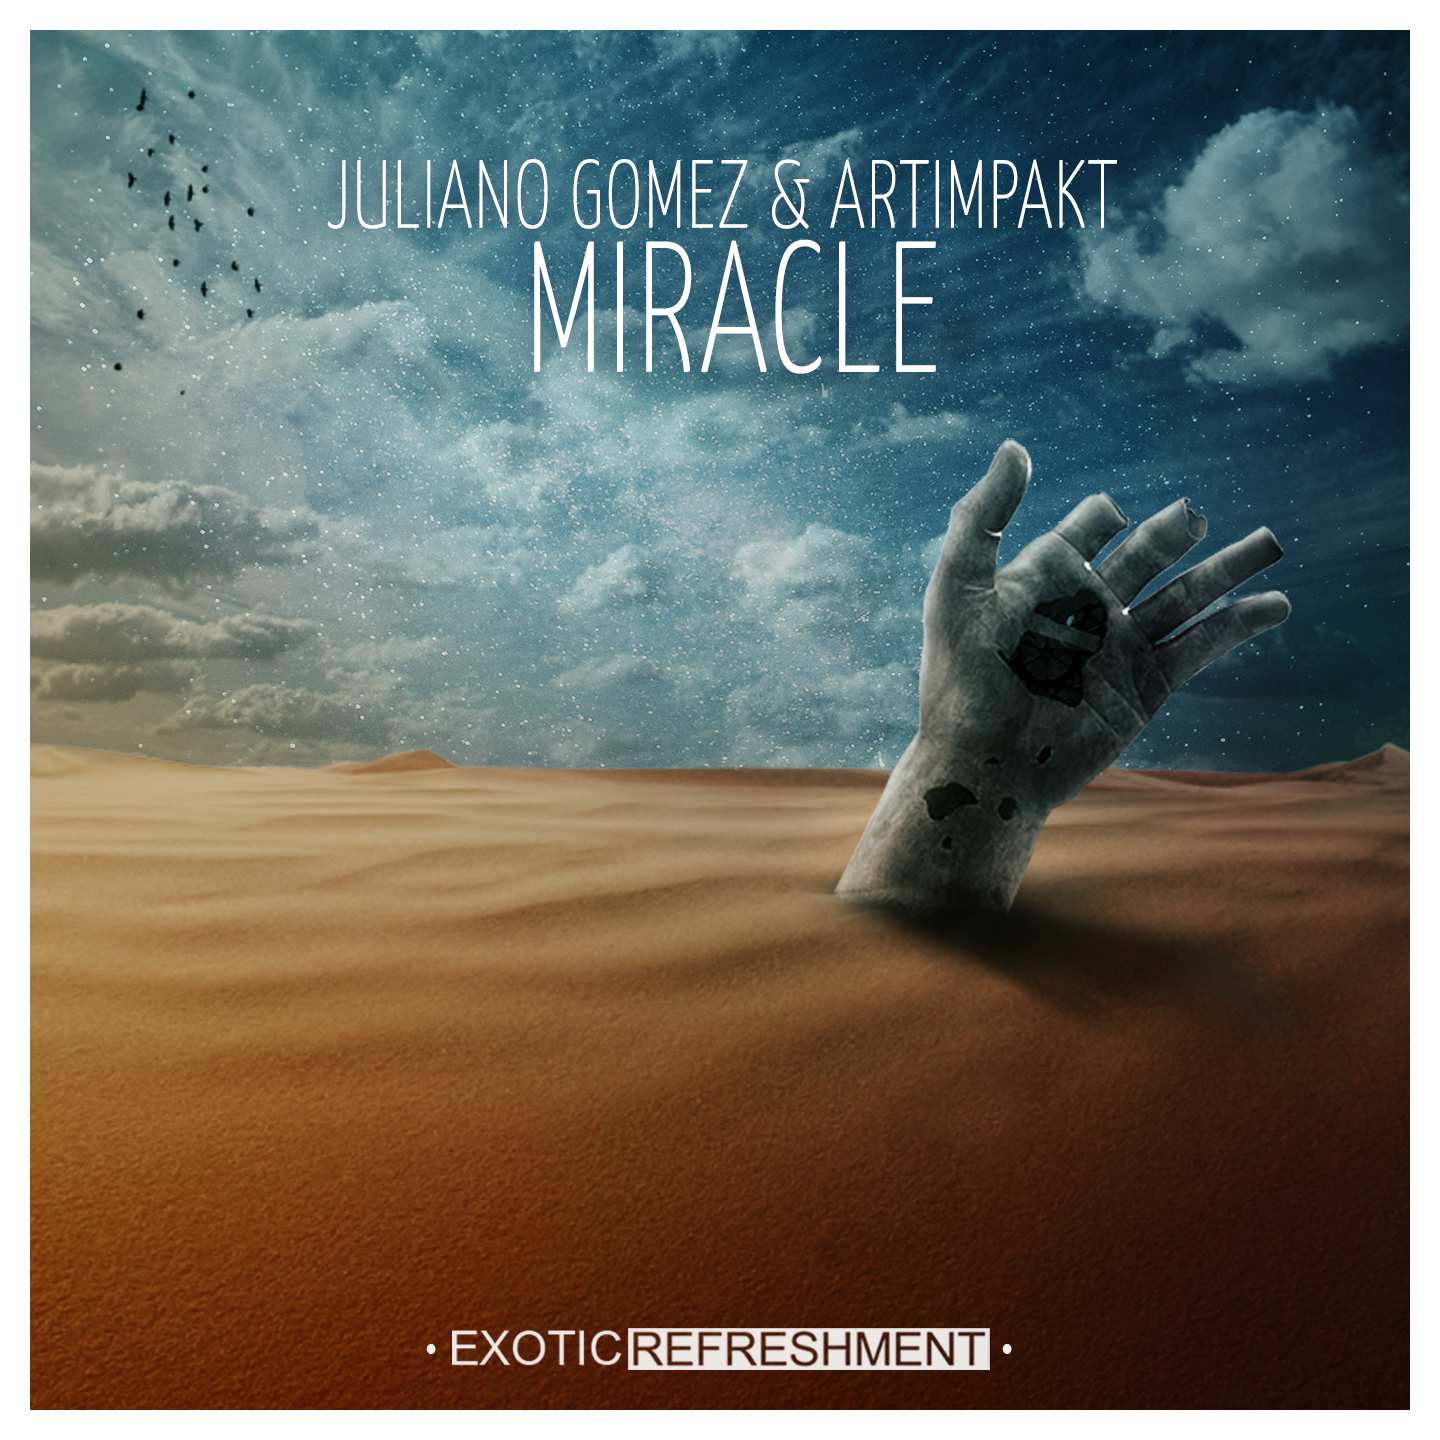 Juliano Gomez & Artimpakt - Miracle